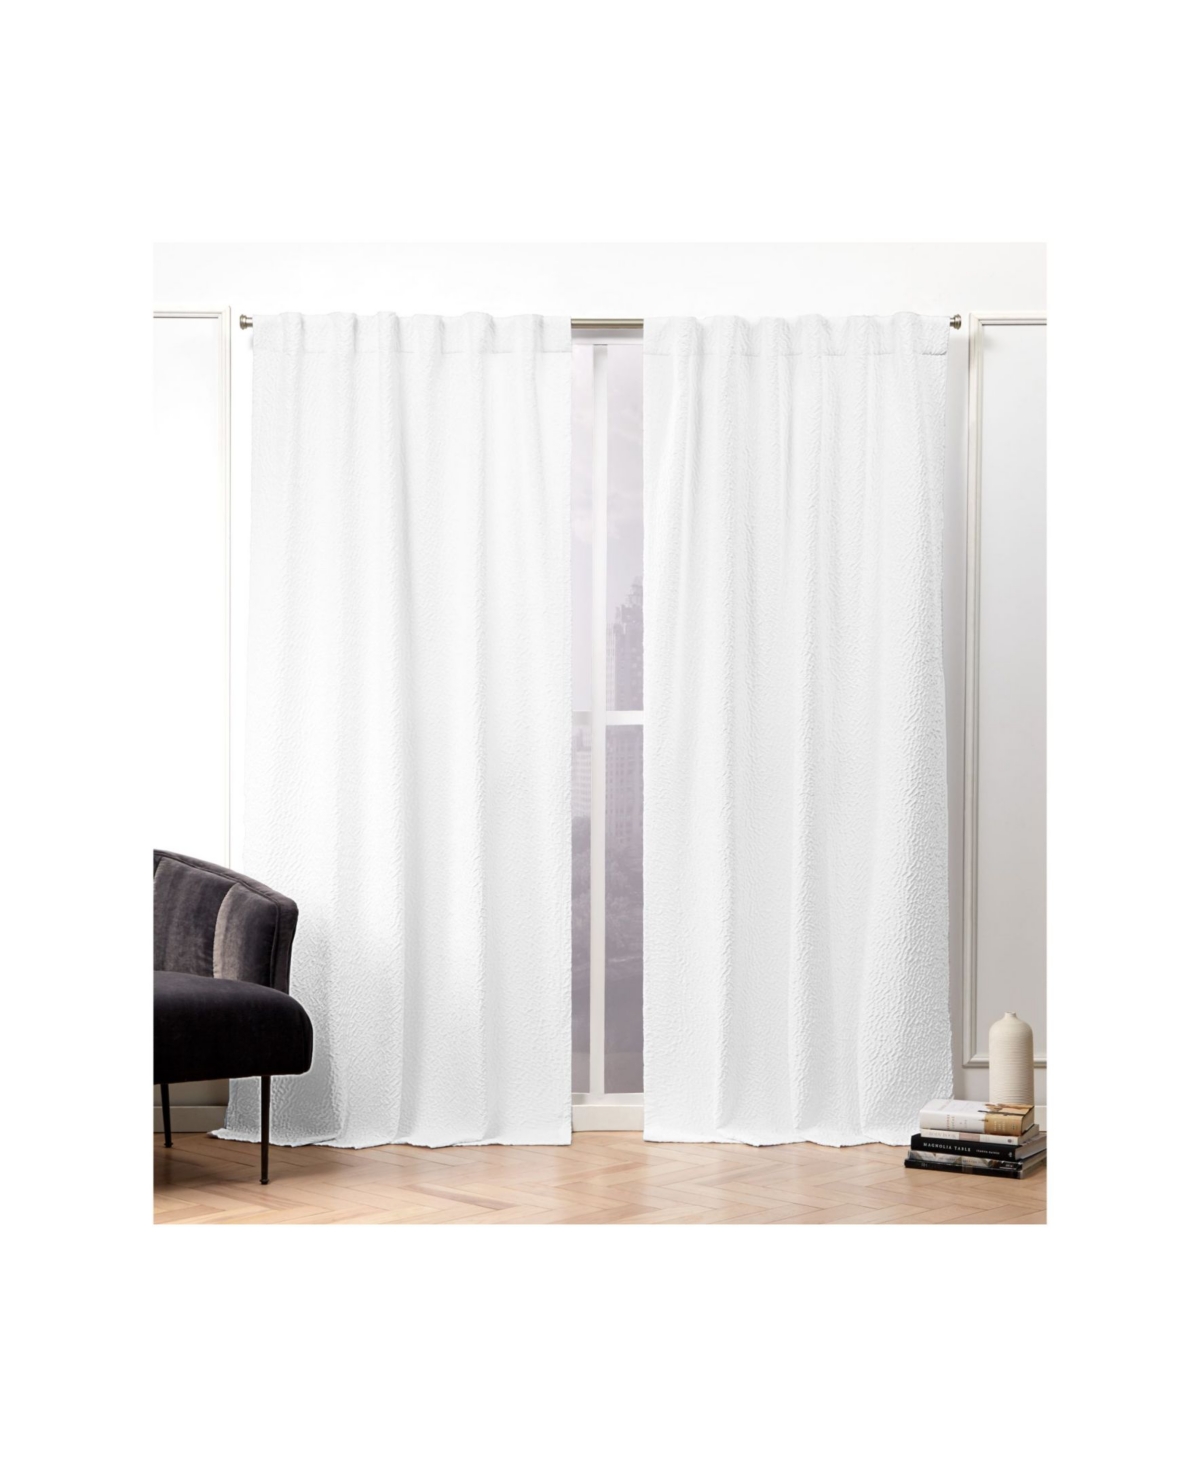 Textured Matelasse Hidden Tab Top Curtain Panel Pair, 50" X 96" - White